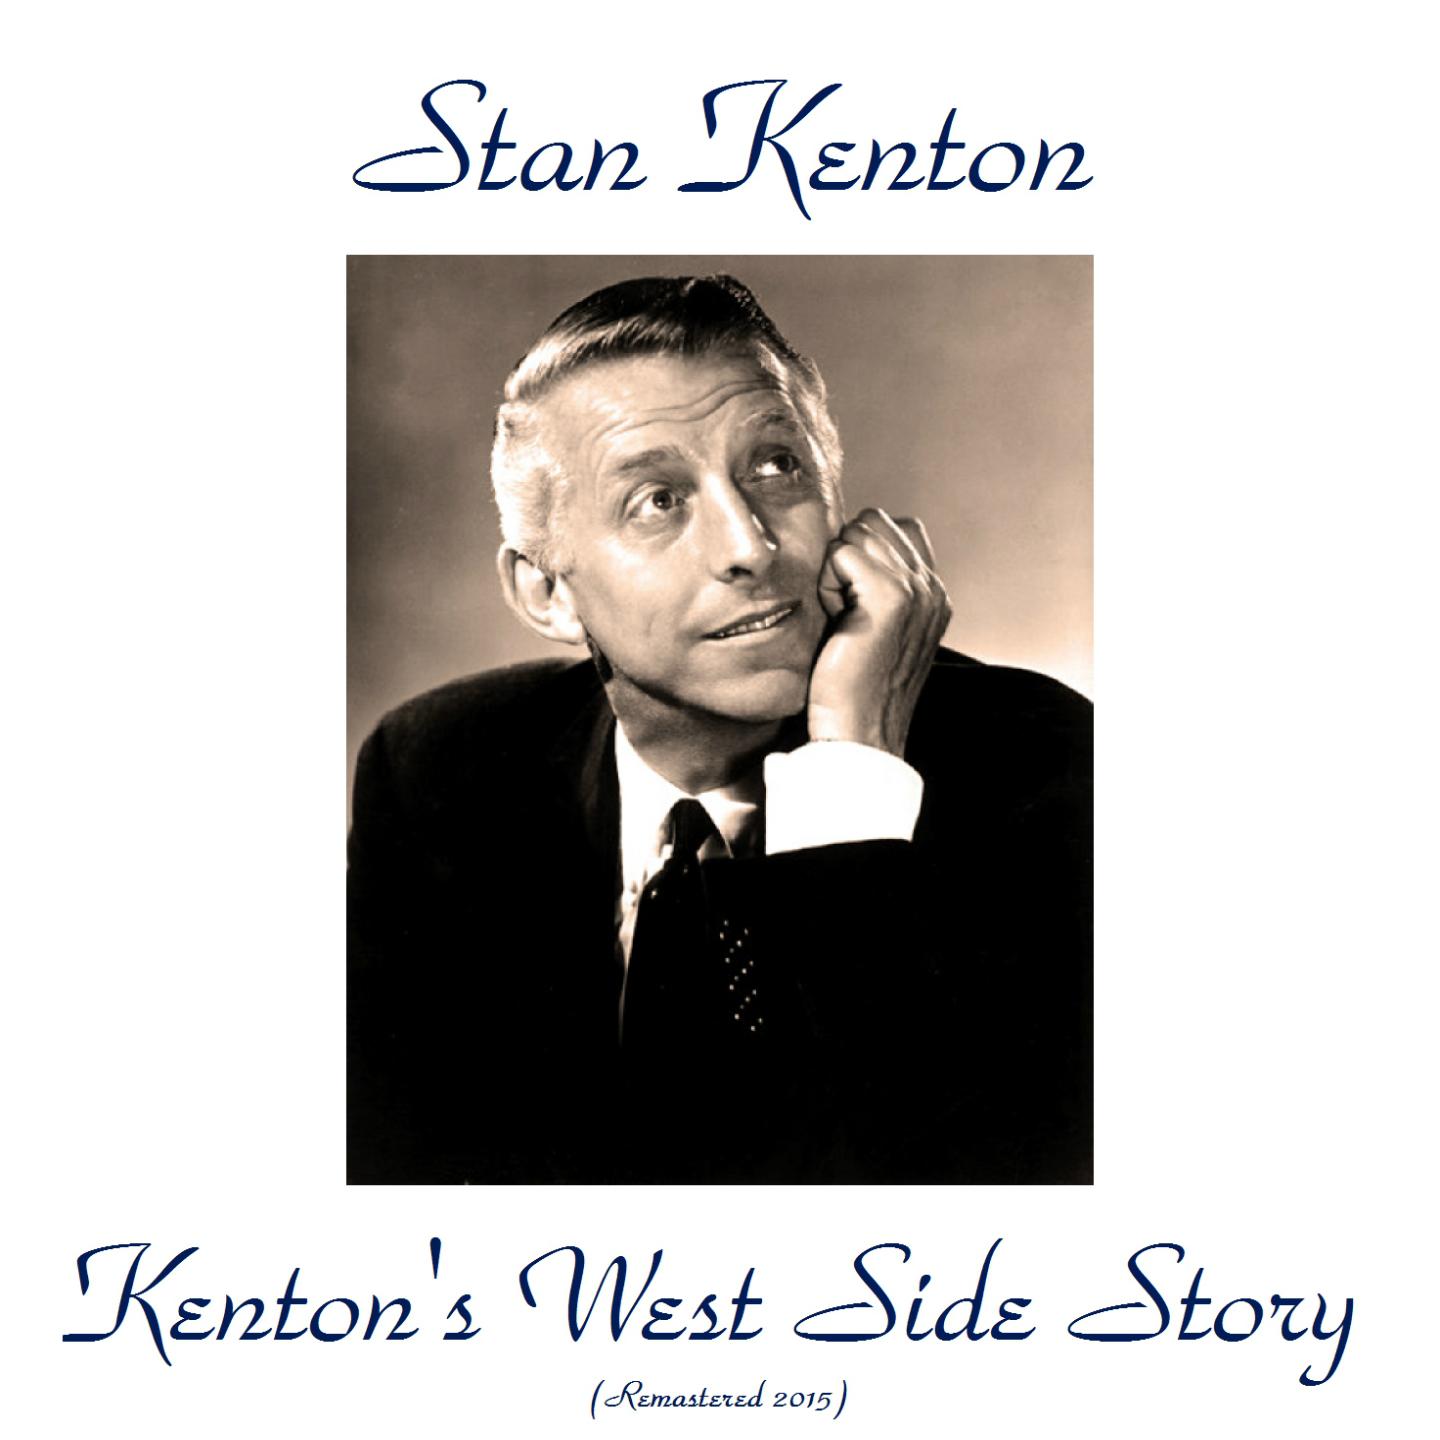 Kenton's West Side Story (Remastered 2015)